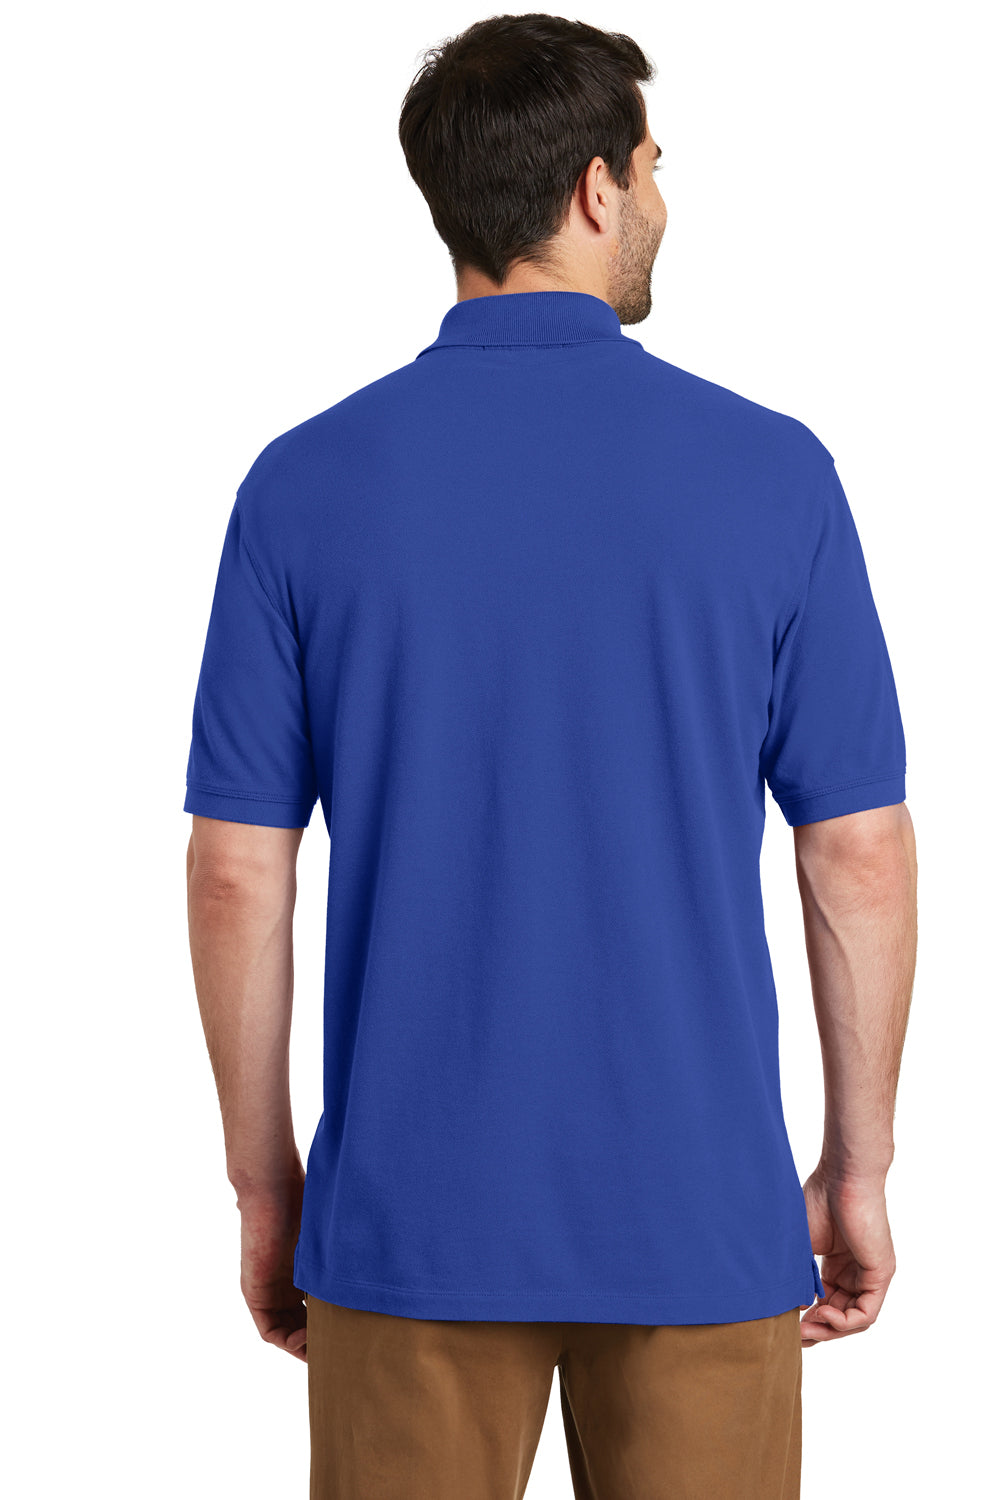 Port Authority K8000 Mens Wrinkle Resistant Short Sleeve Polo Shirt Royal Blue Back